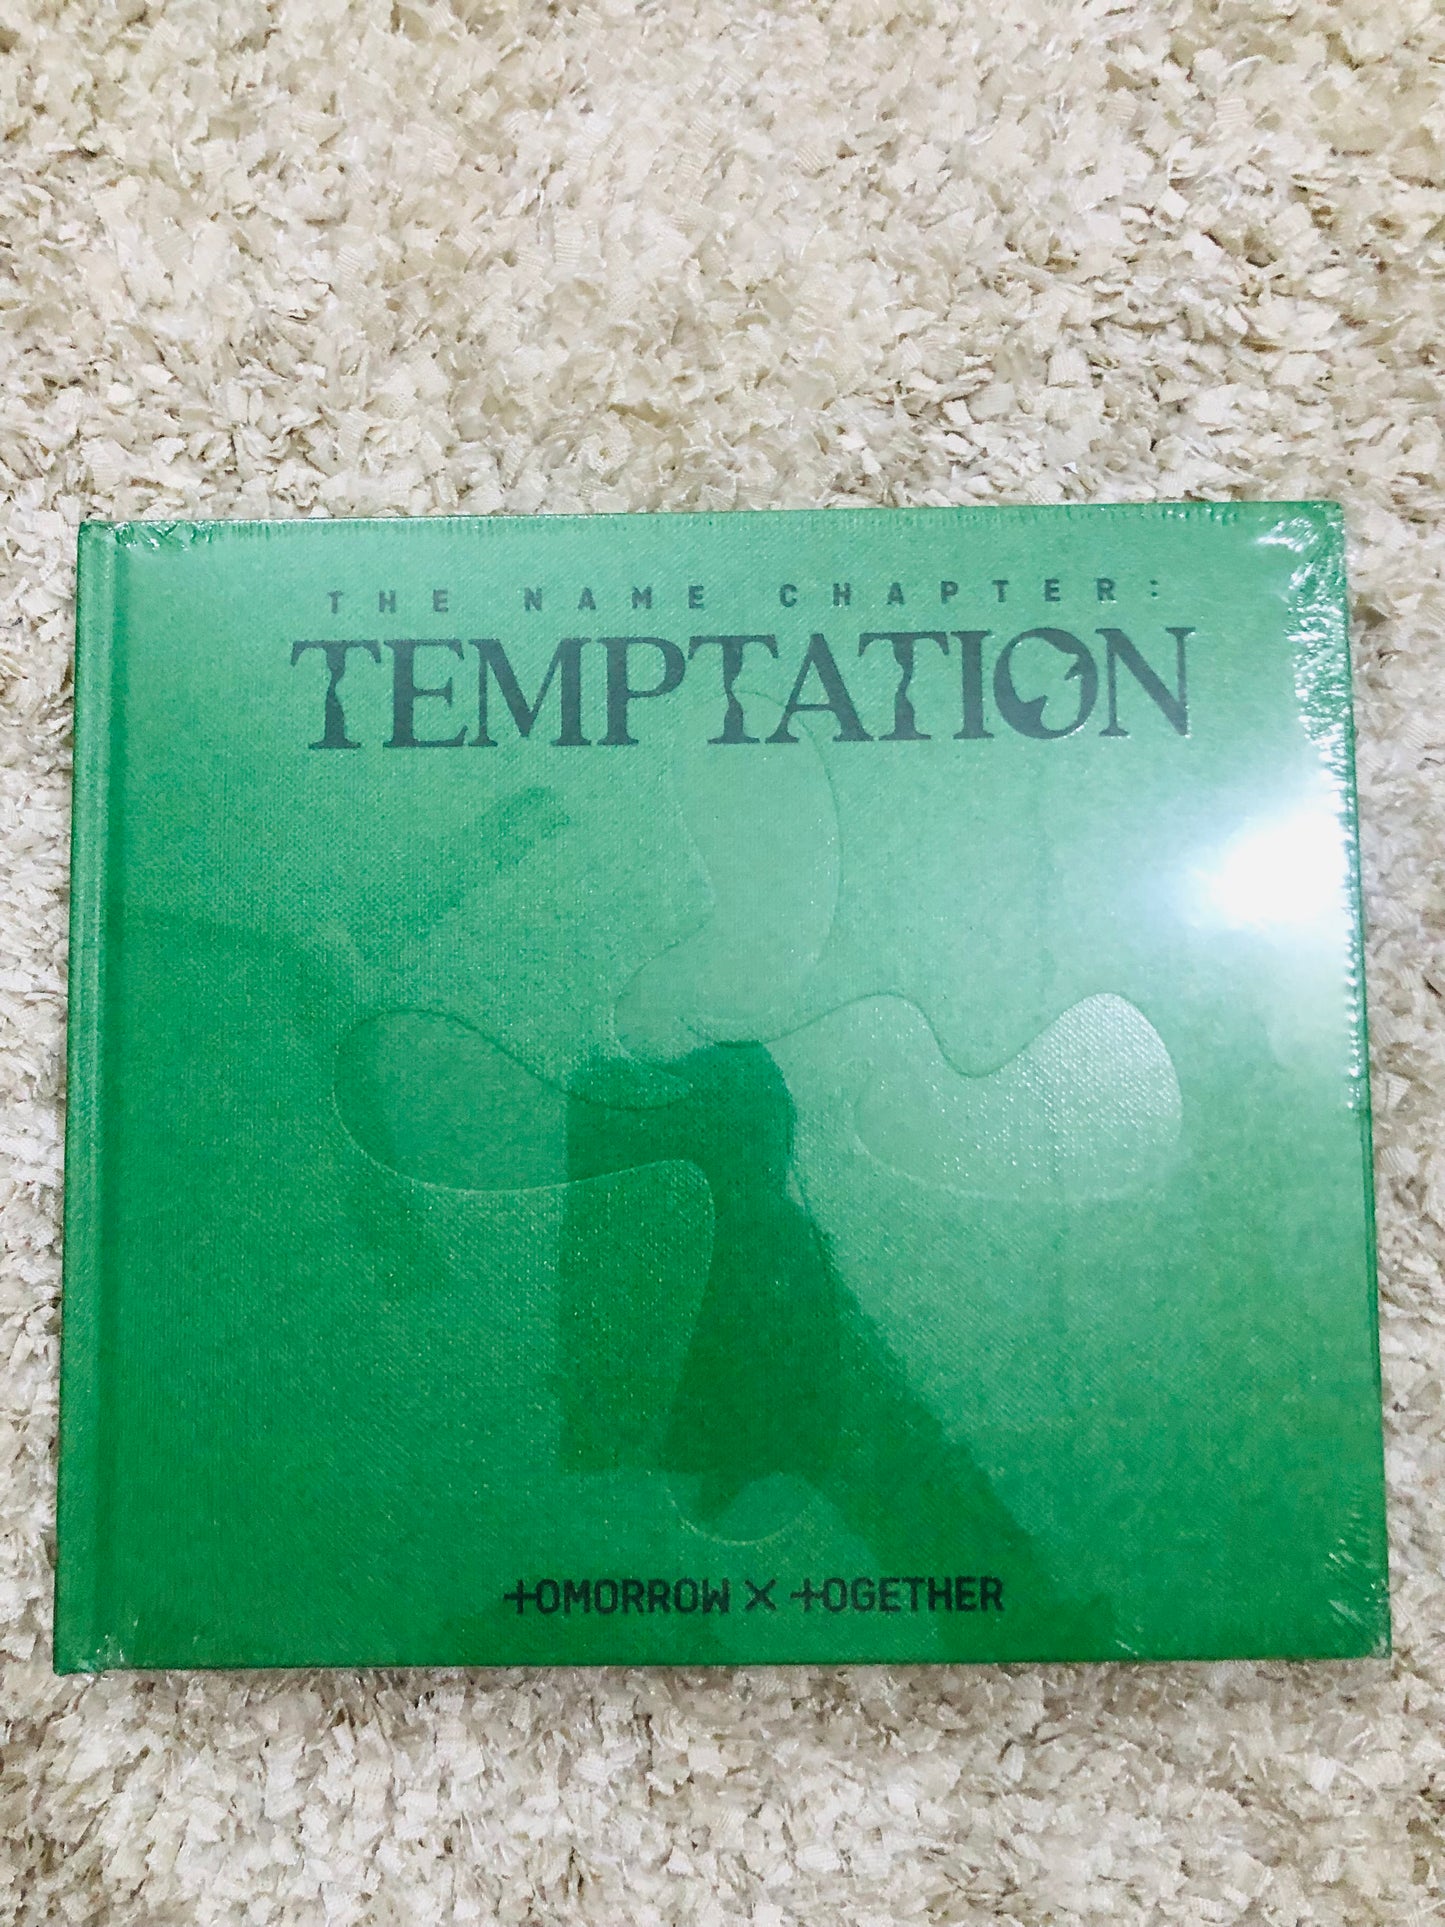 Temptation Farewell Official Album